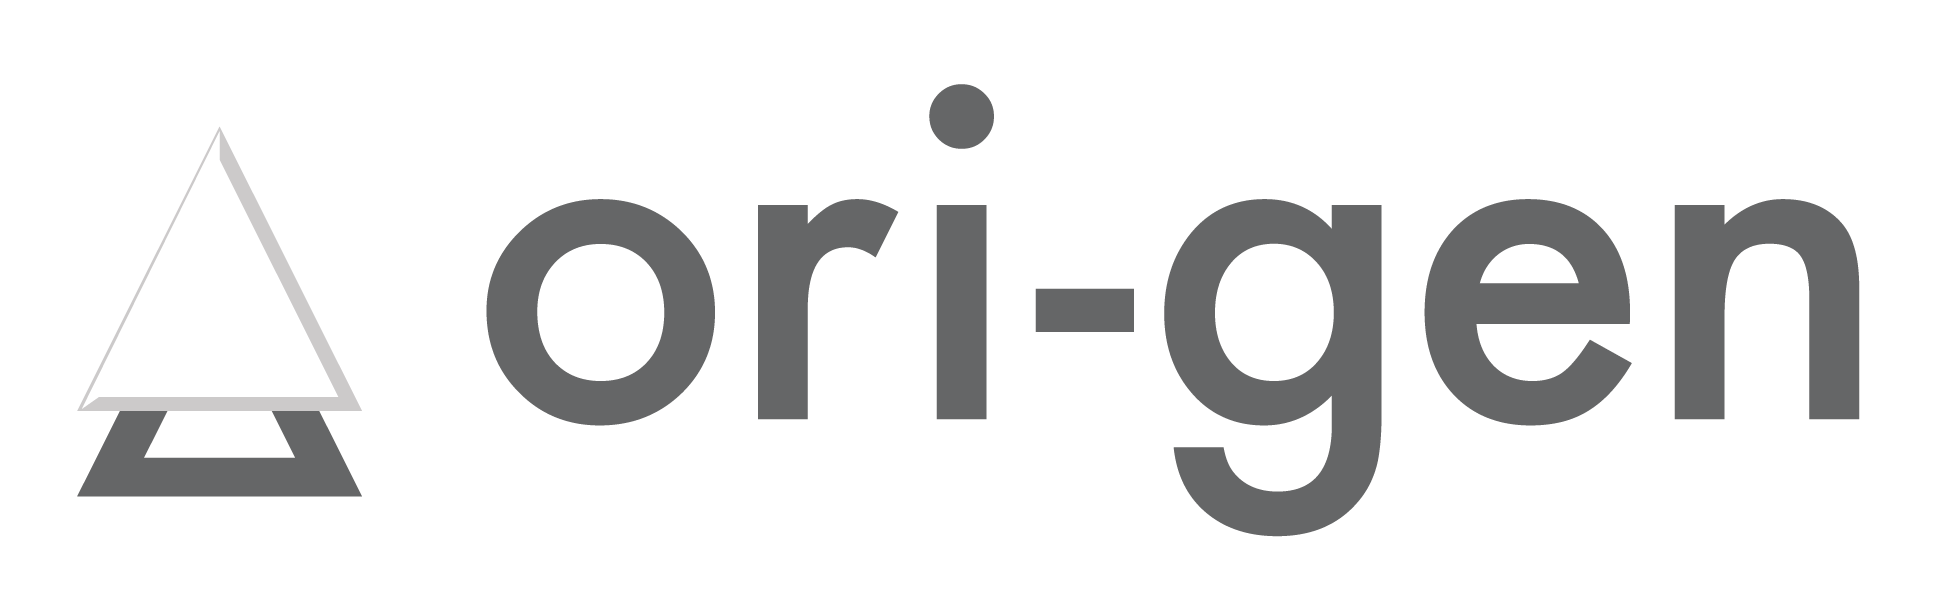 Ori-gen Logo PNG.png